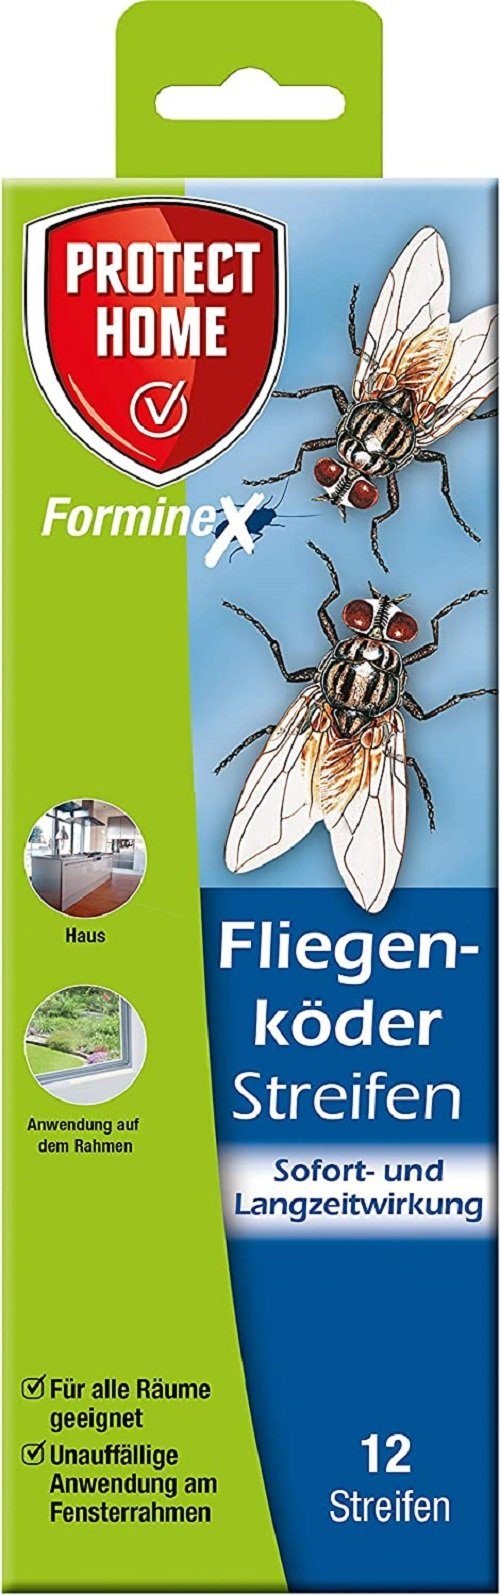 Protect Home Insektenvernichtungsmittel Protect Home Forminex Fliegenköder Streifen 12 Stück Fliegenbekämpfung